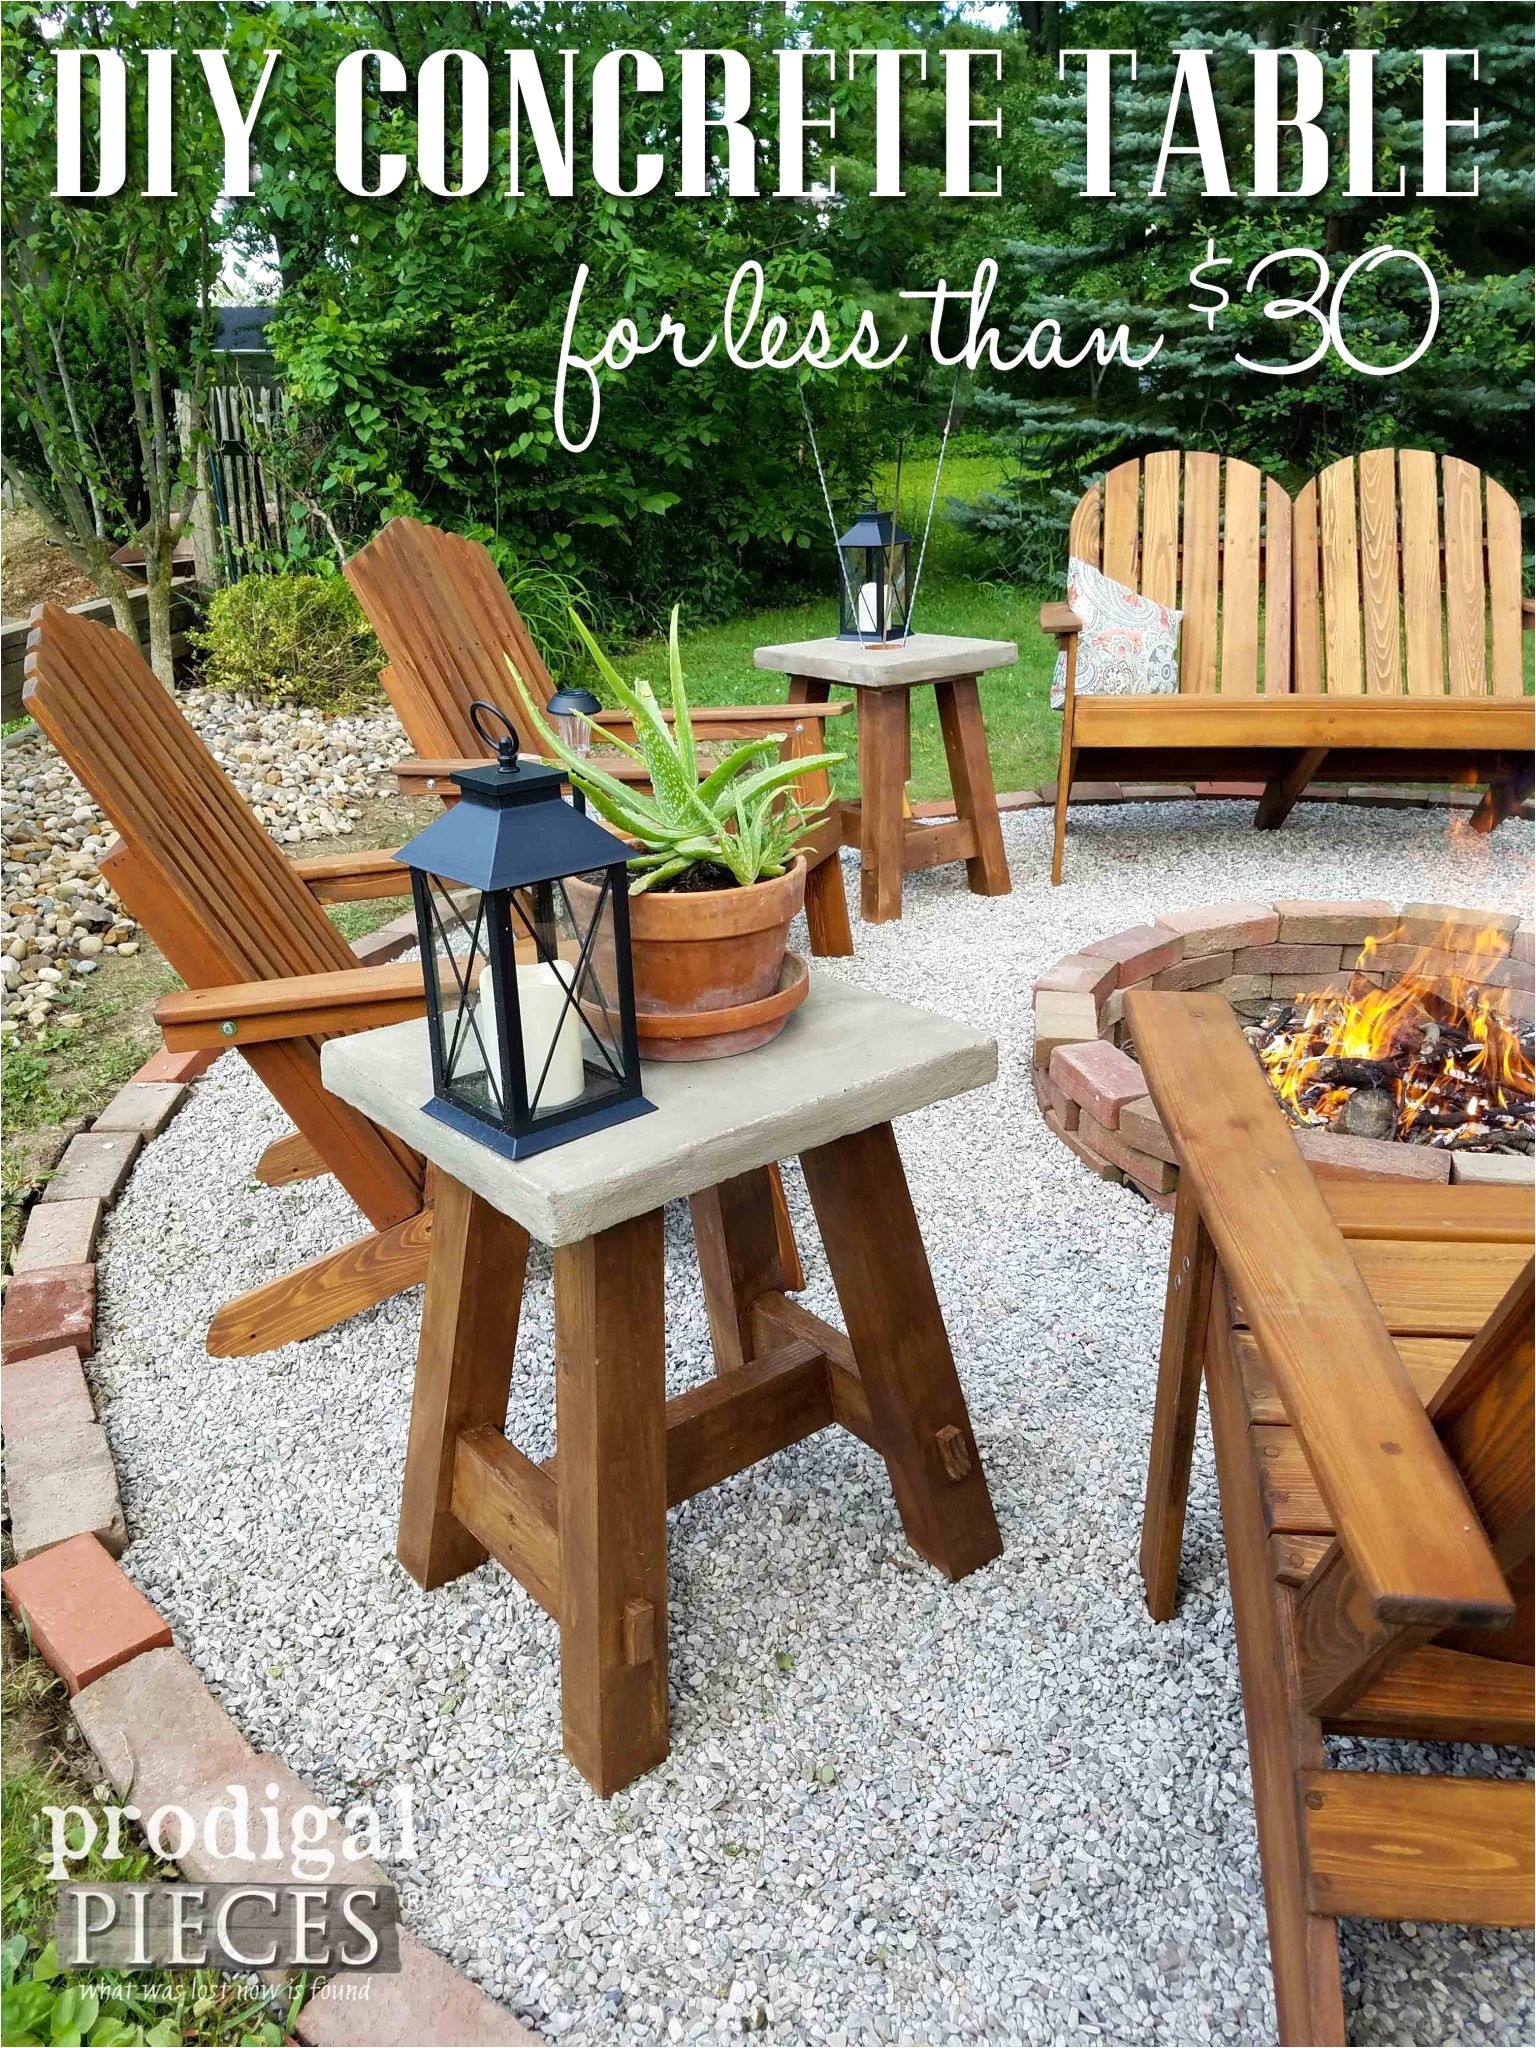 2x4 outdoor furniture plans 31 new diy outdoor furniture ideas